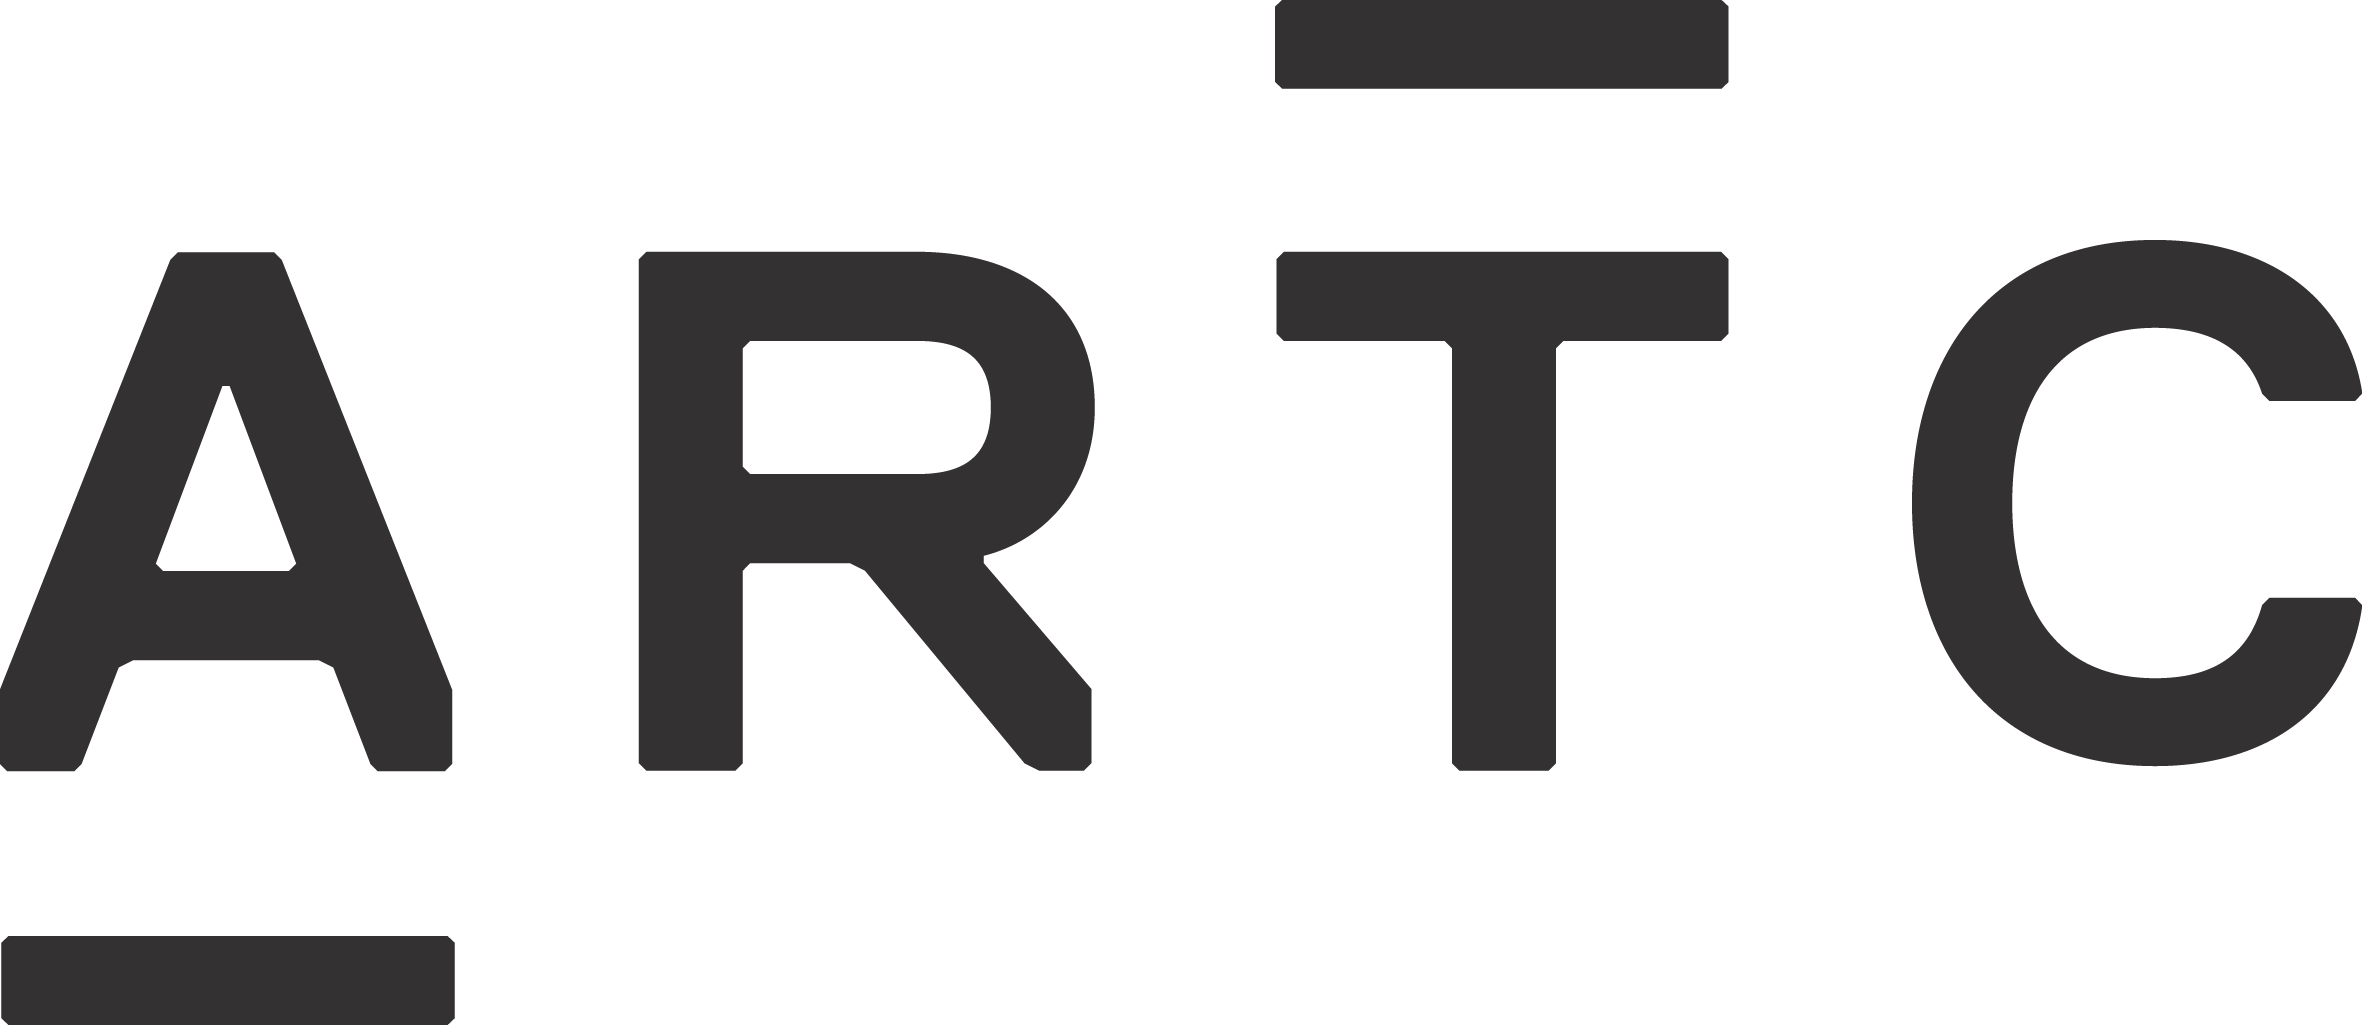 artc-logo - Then Somehow